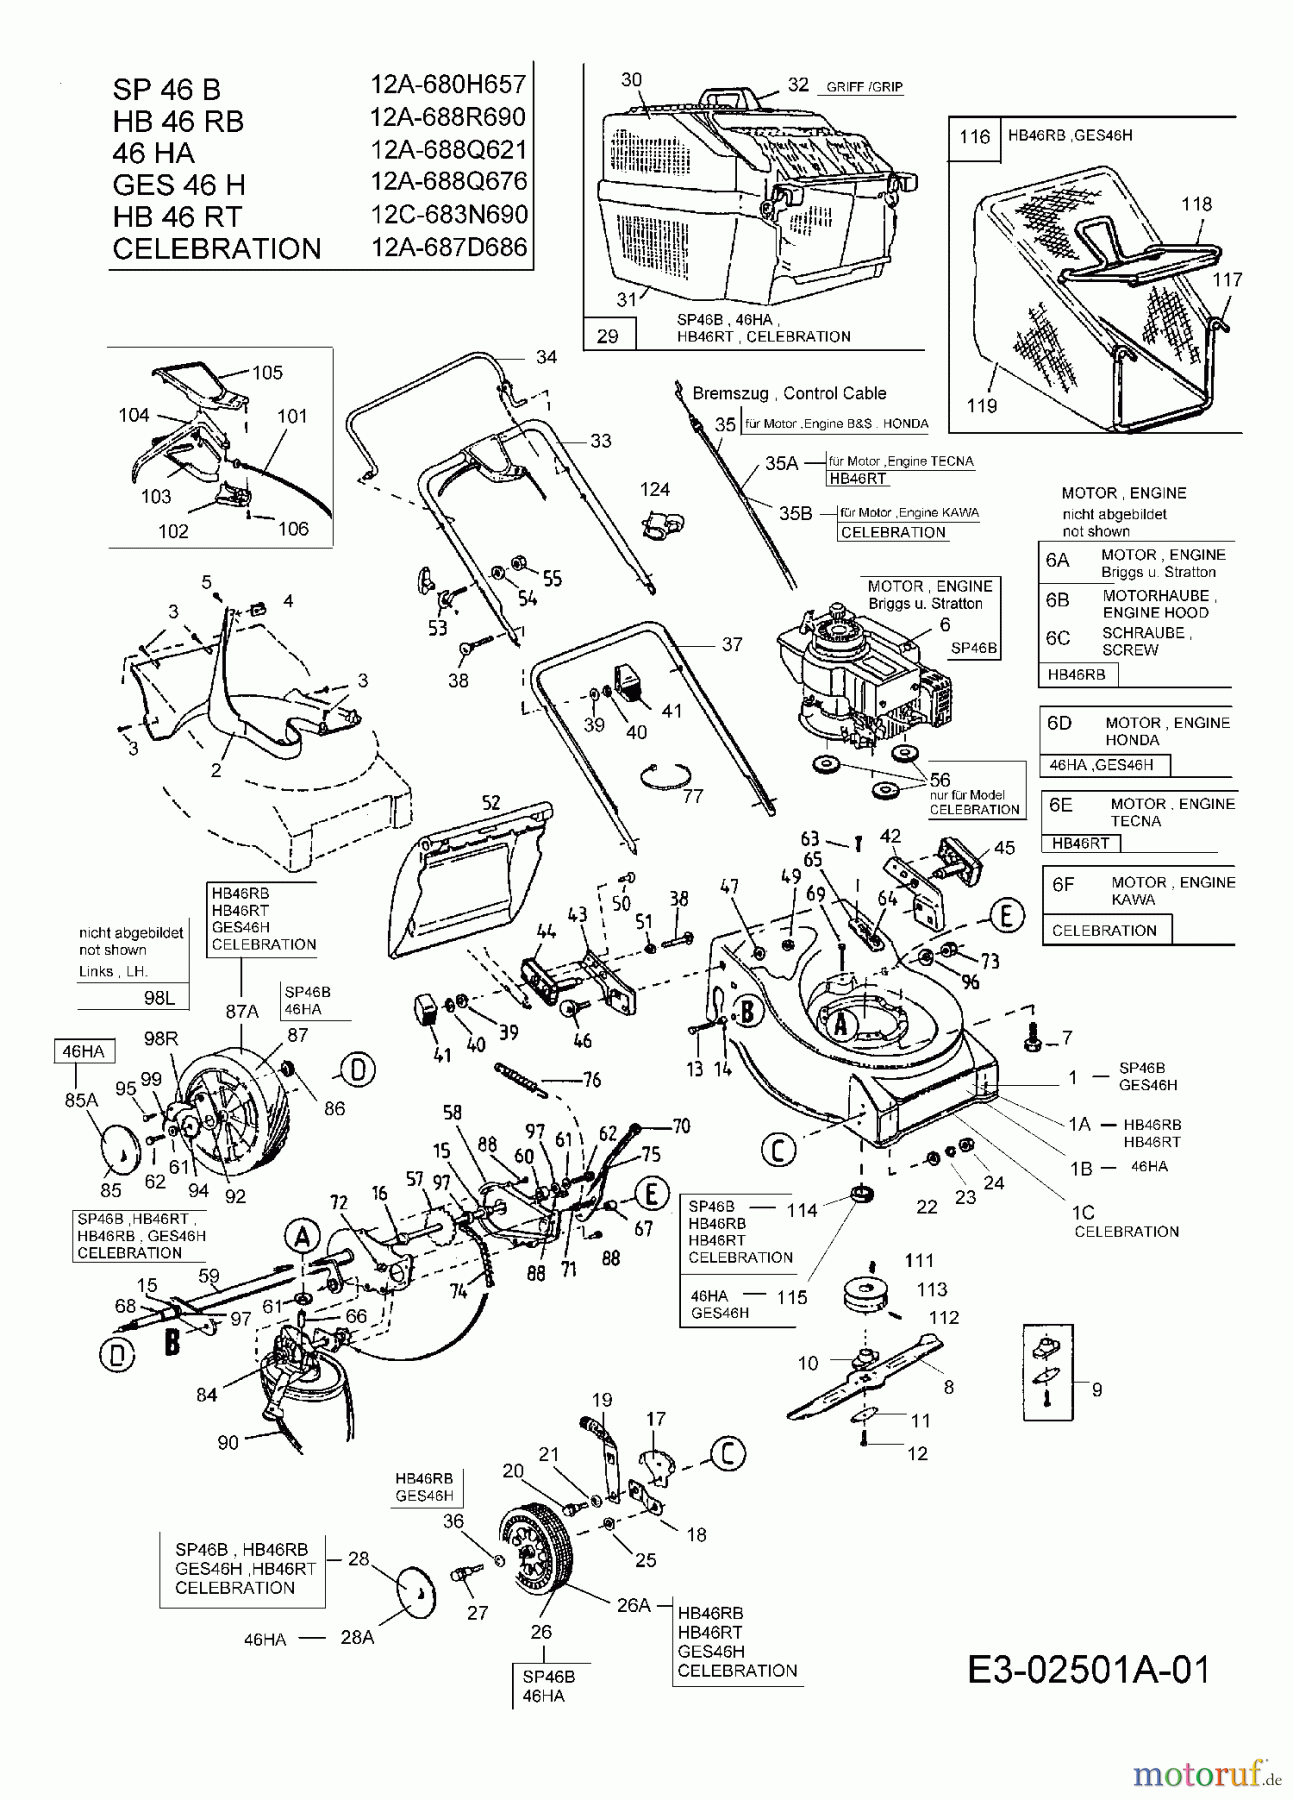  MTD Motormäher mit Antrieb Celebration 46 12A-687D686  (2005) Grundgerät